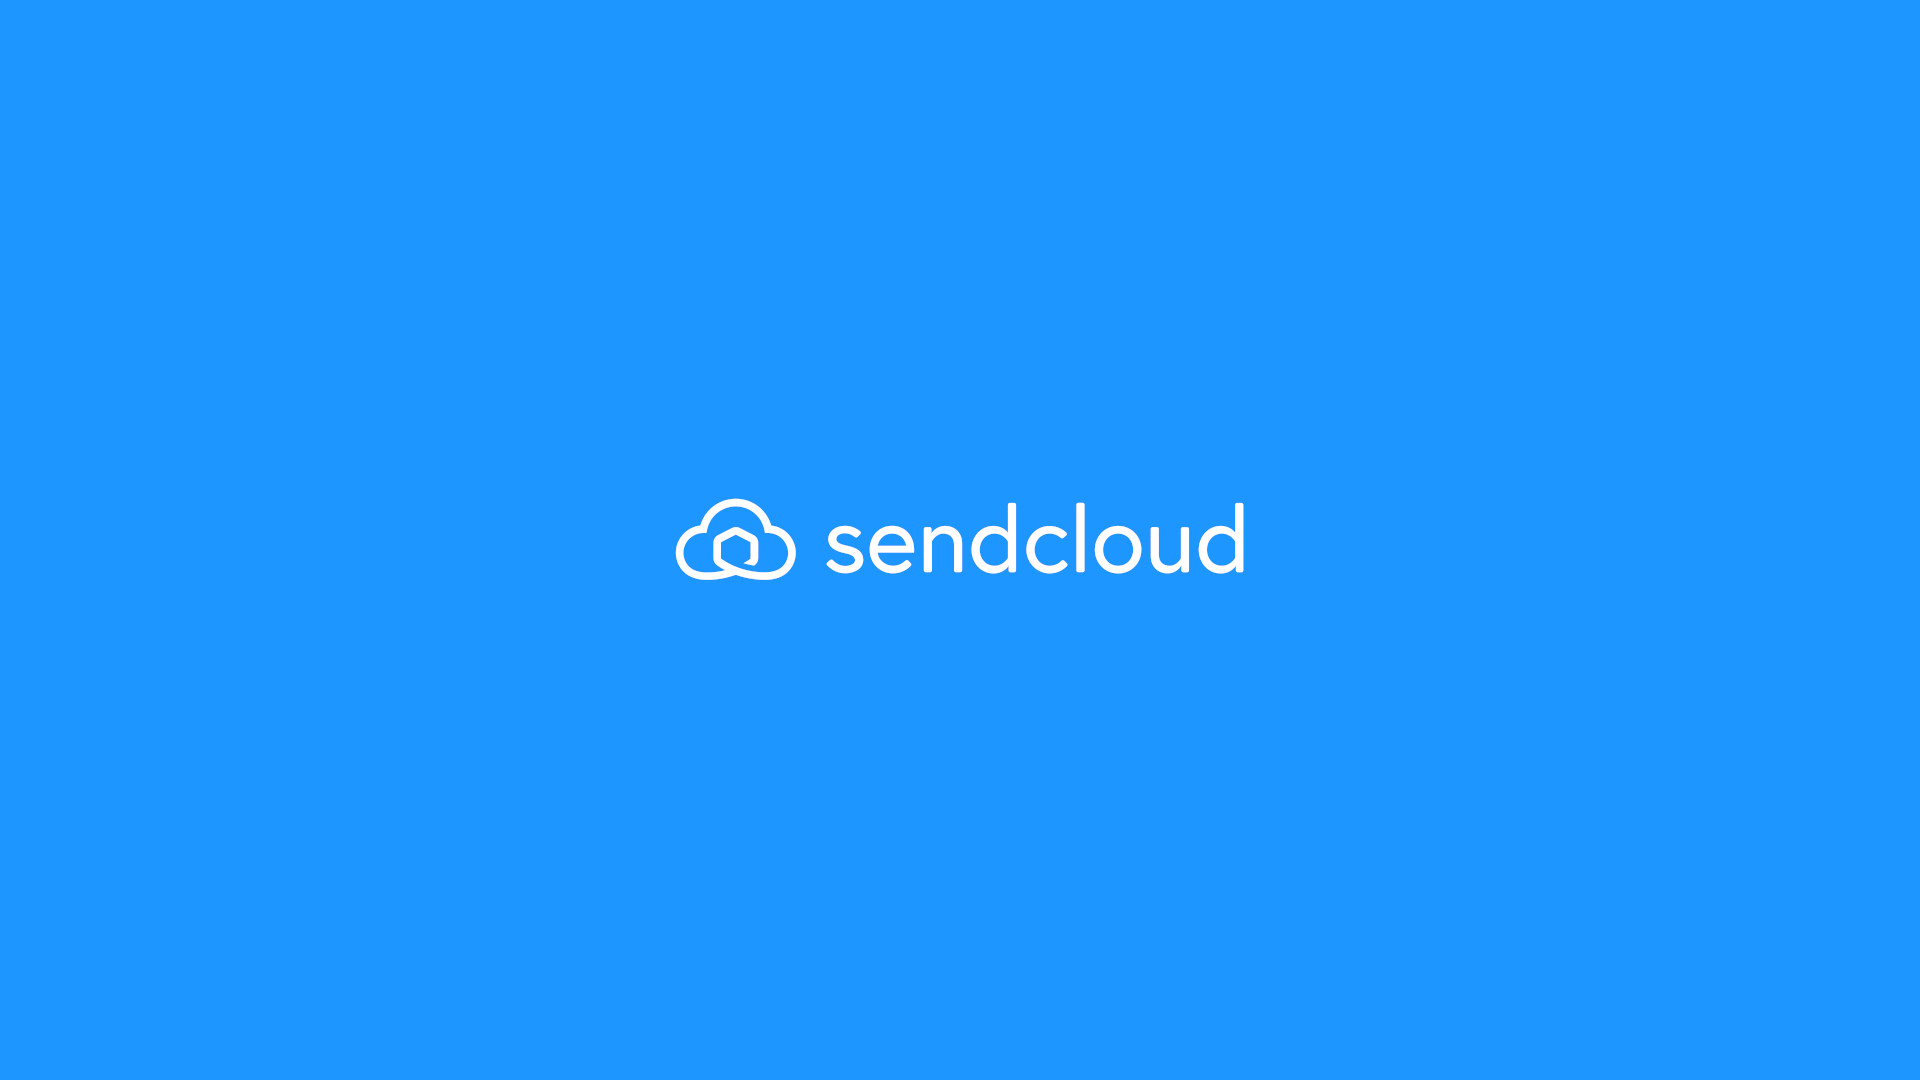 Sendcloud – Individuelle Schnittstelle